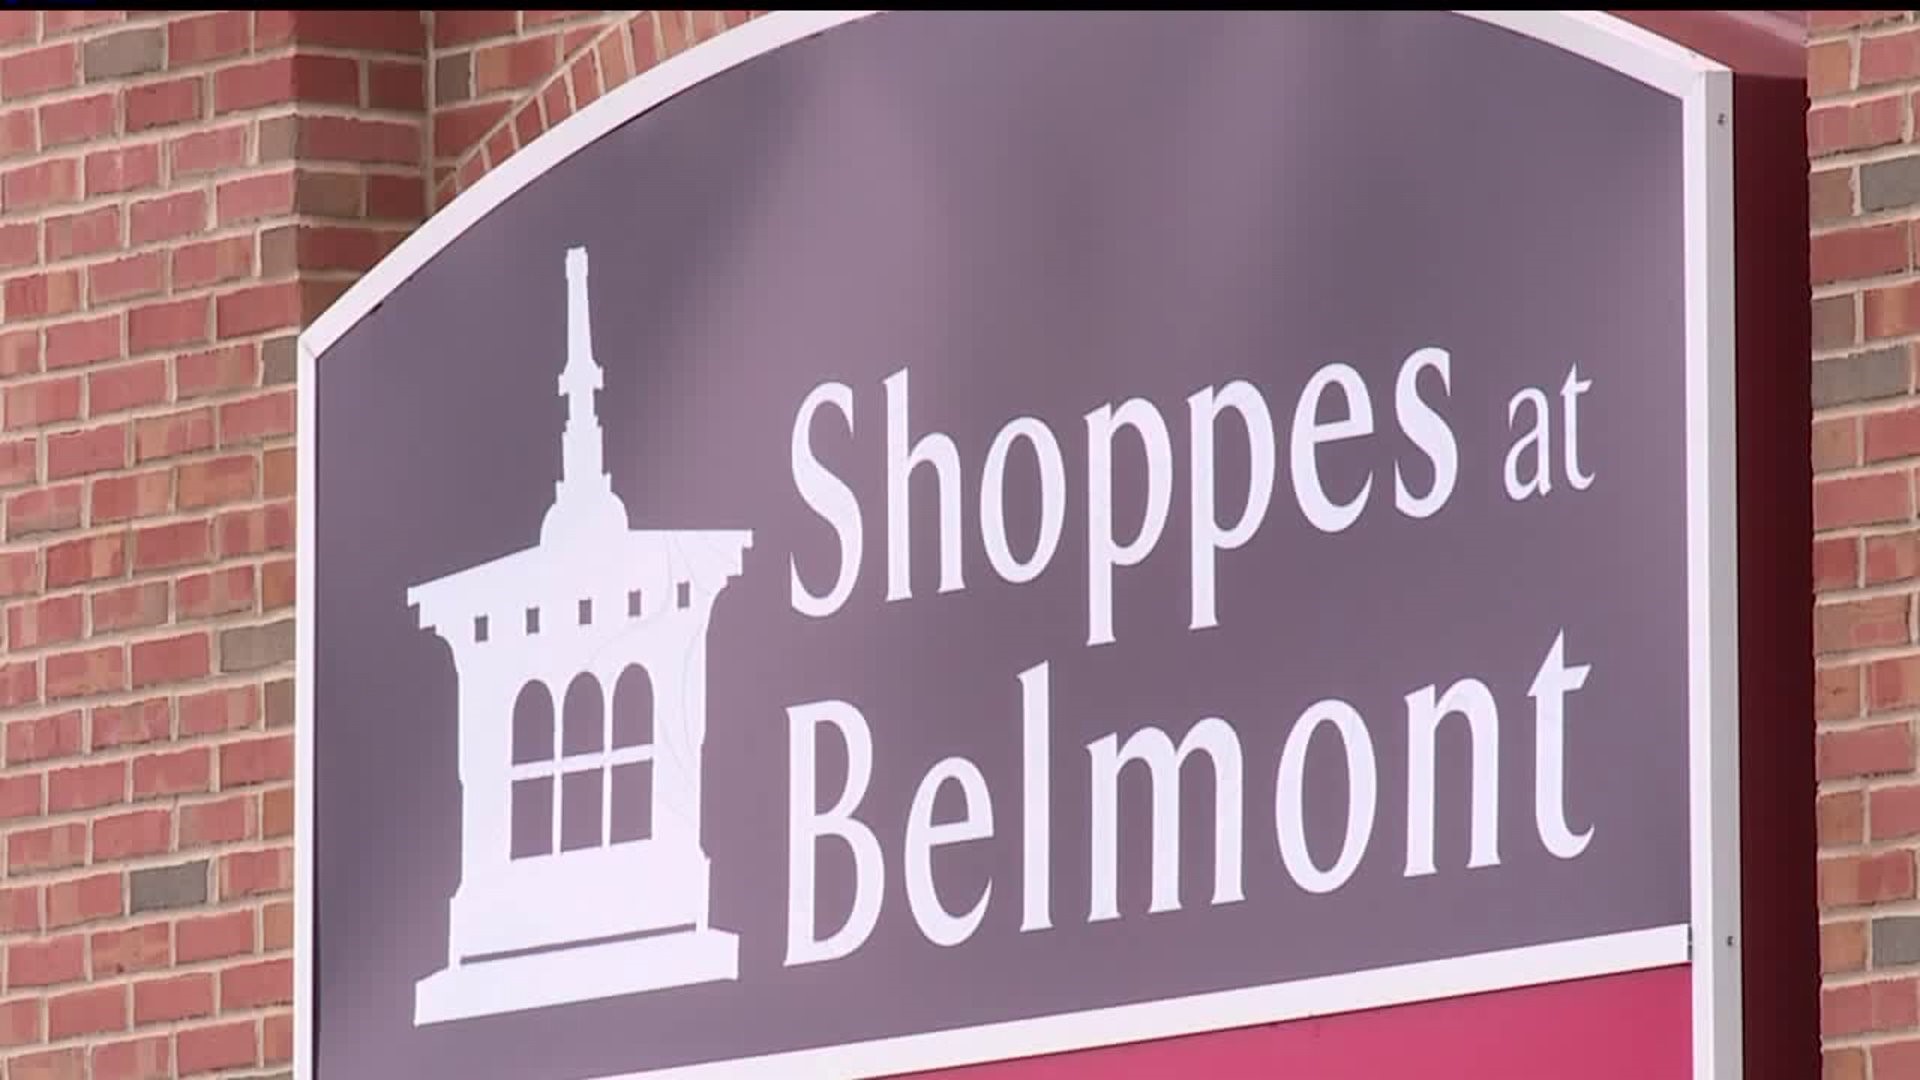 Vehicle break-ins under investigation at `Shoppes at Belmont` in Lancaster